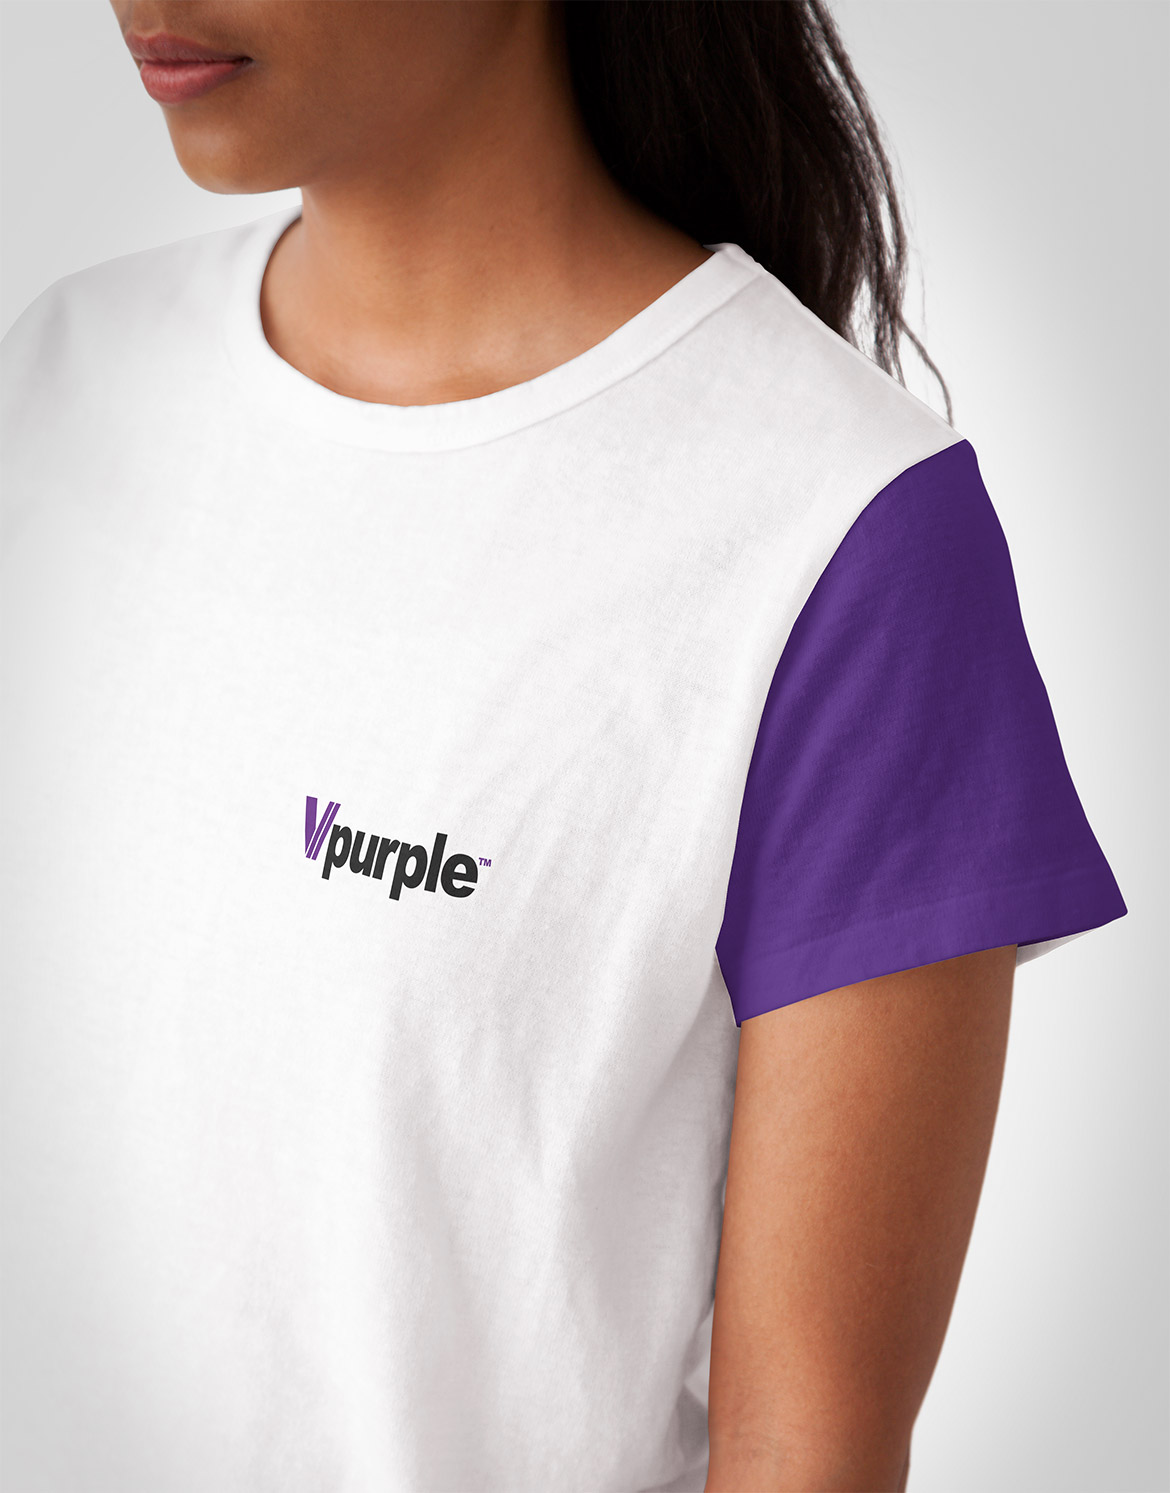 Vpurple logo on tshirt